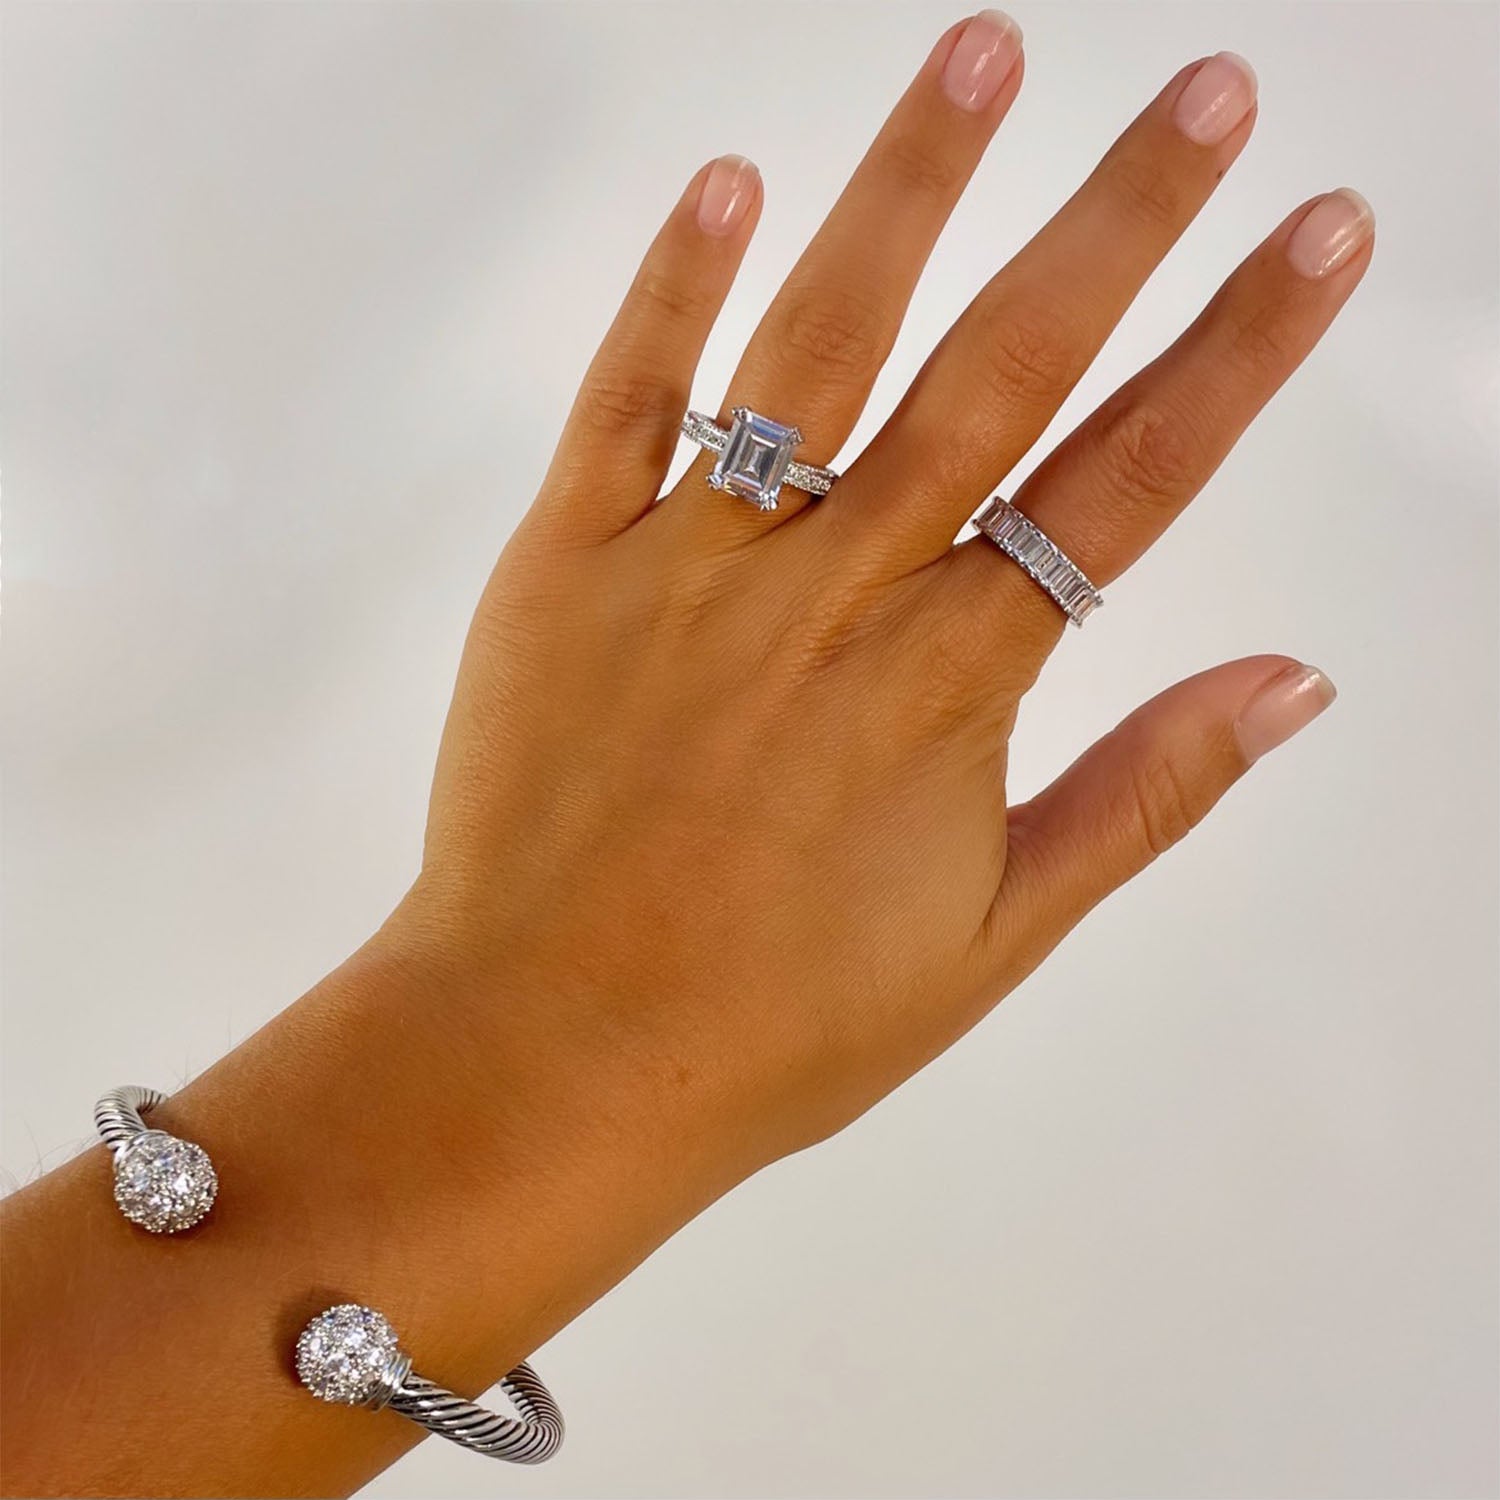 Hope 5 Ct. Emerald Cut CZ Diamond Ring, Silver - Zahra Jewelry